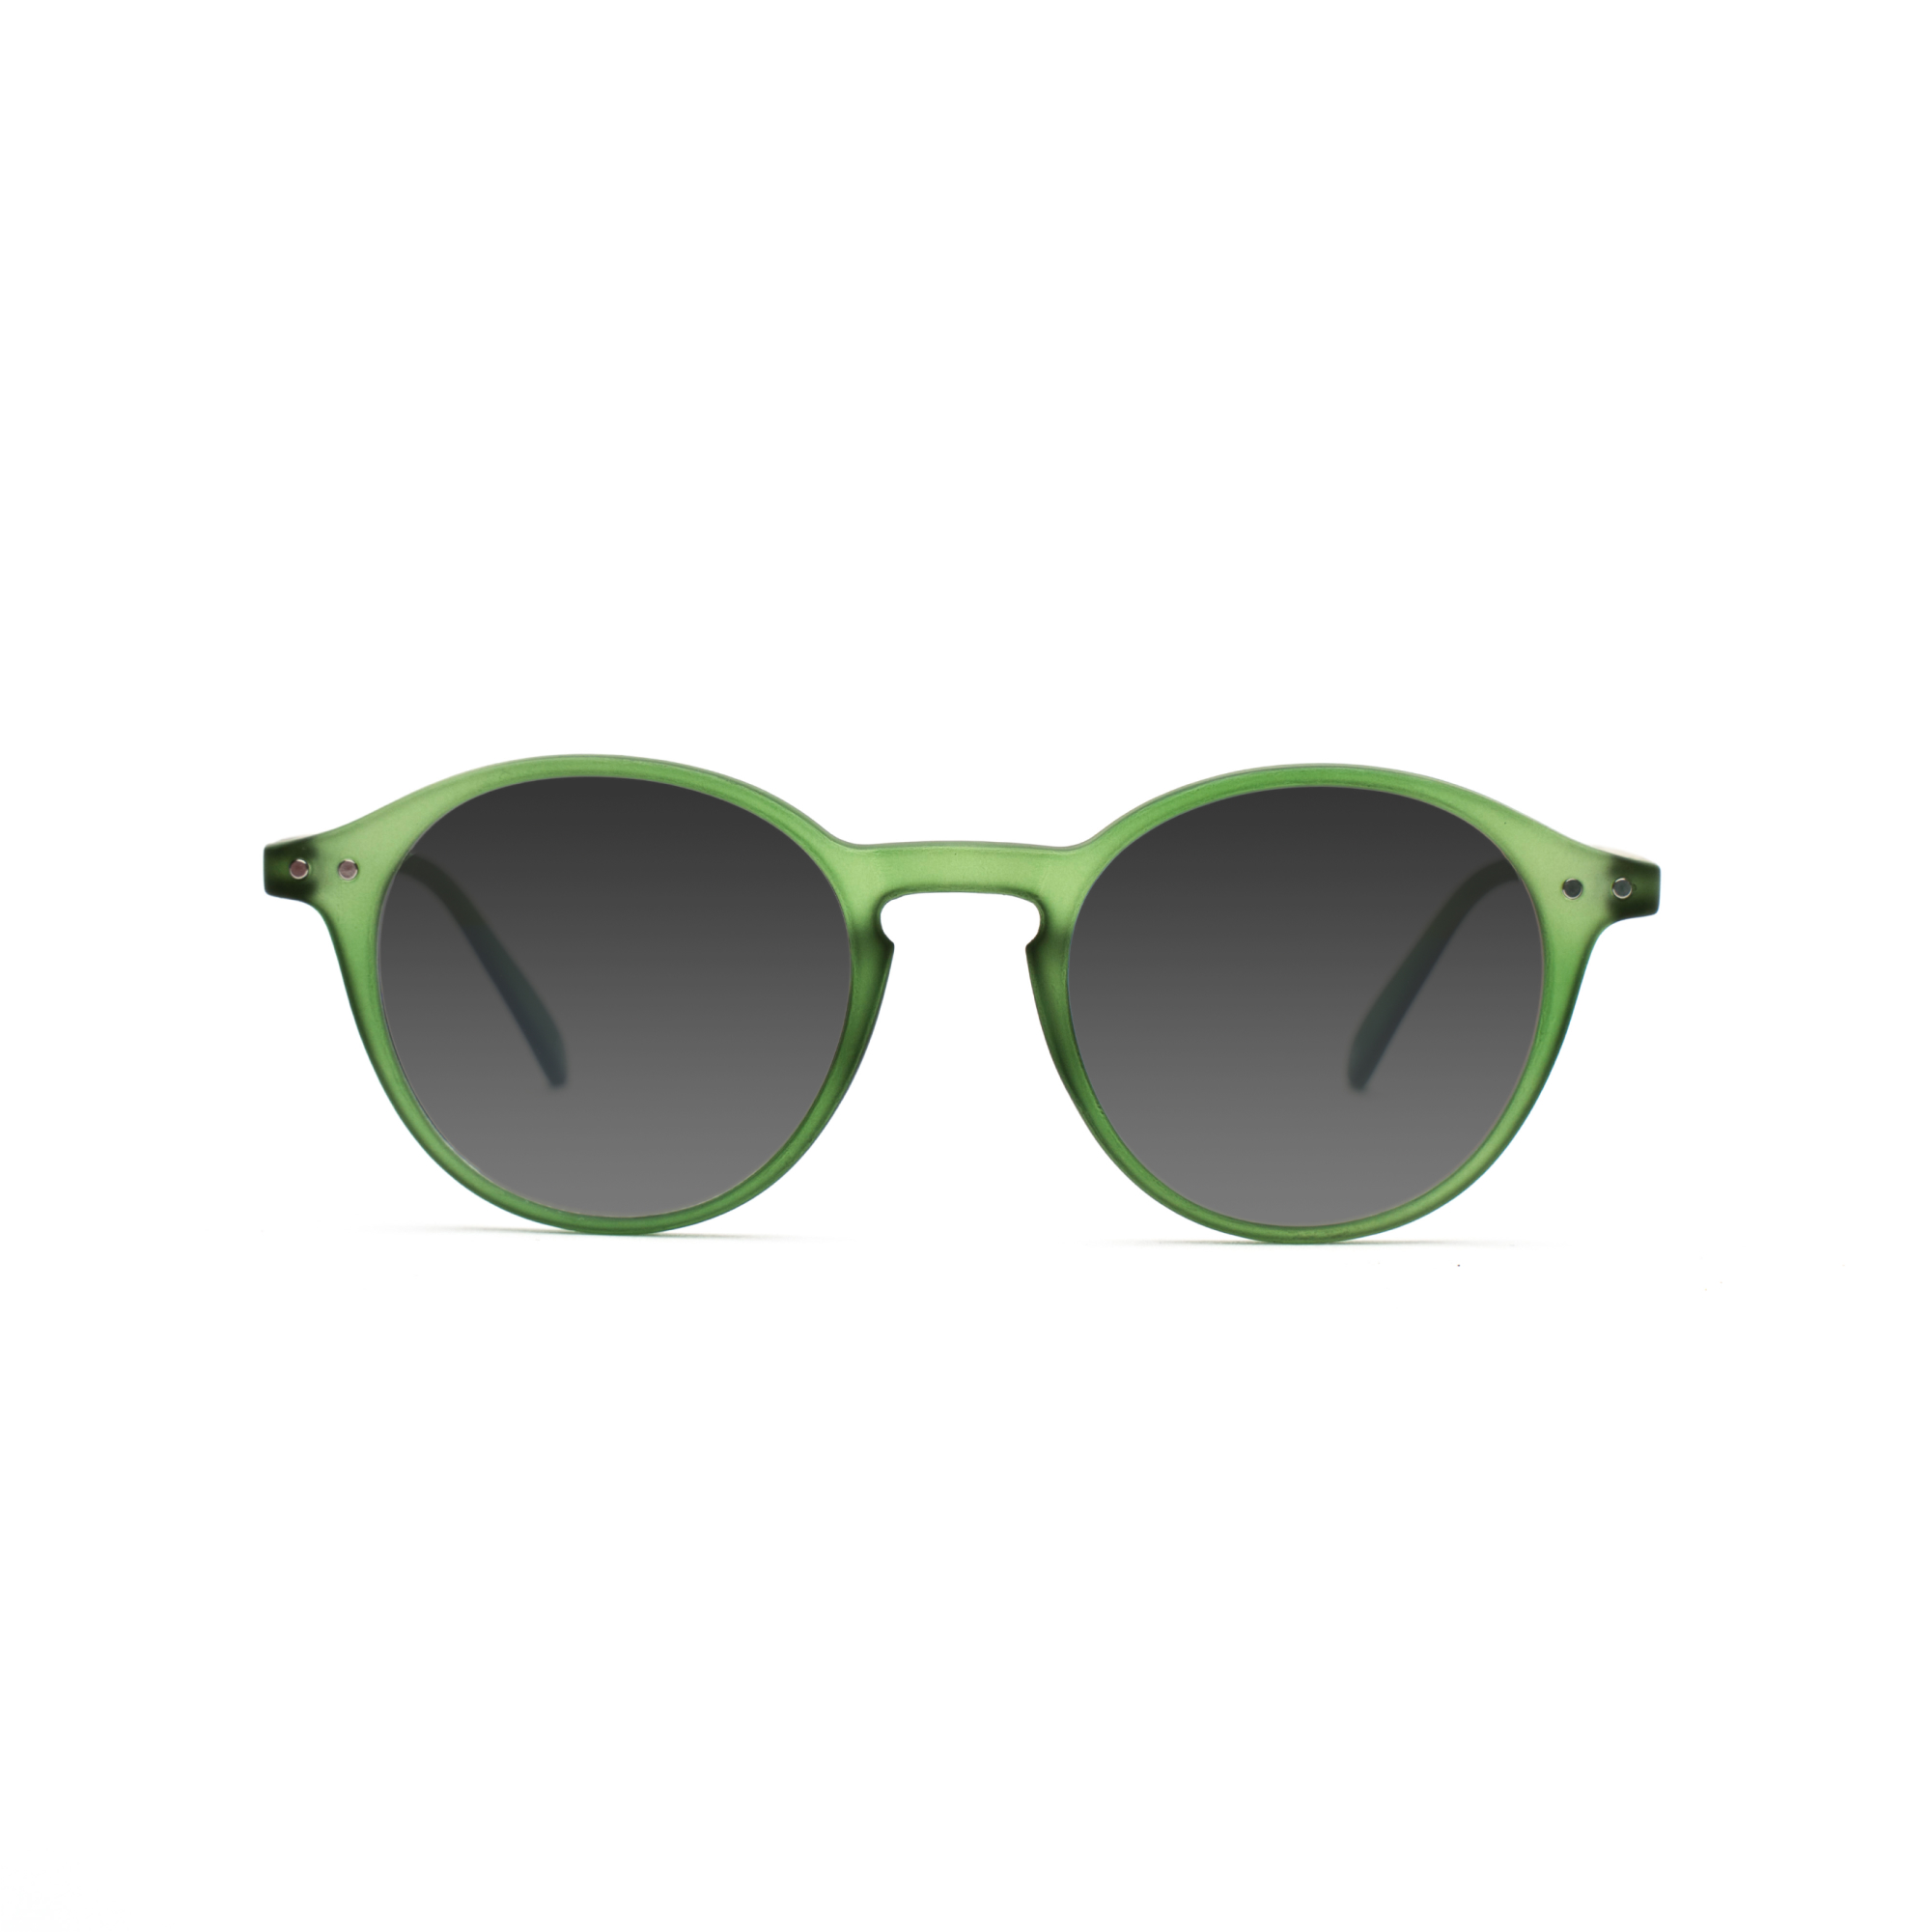 men's sunglasses – Luca UVSUN m - Green